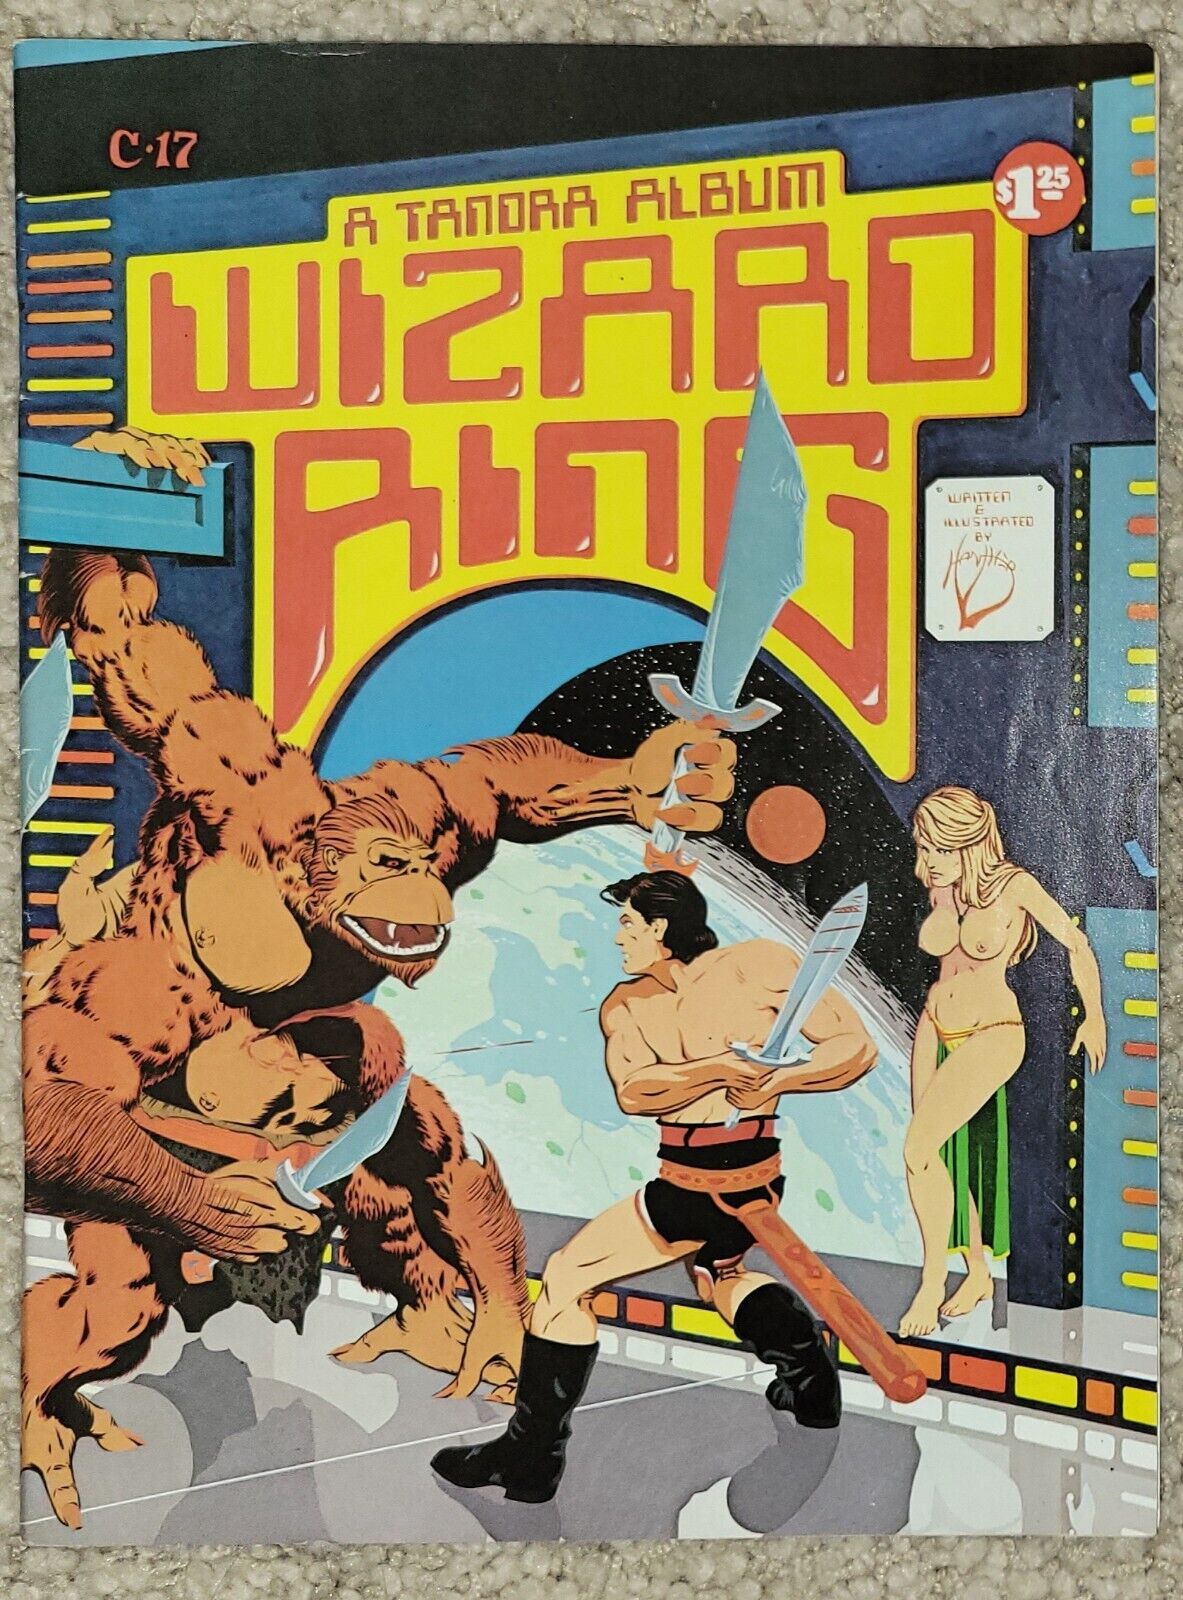 1980 Wizard Ring Magazine C-17 Tandra Hanther V/VF